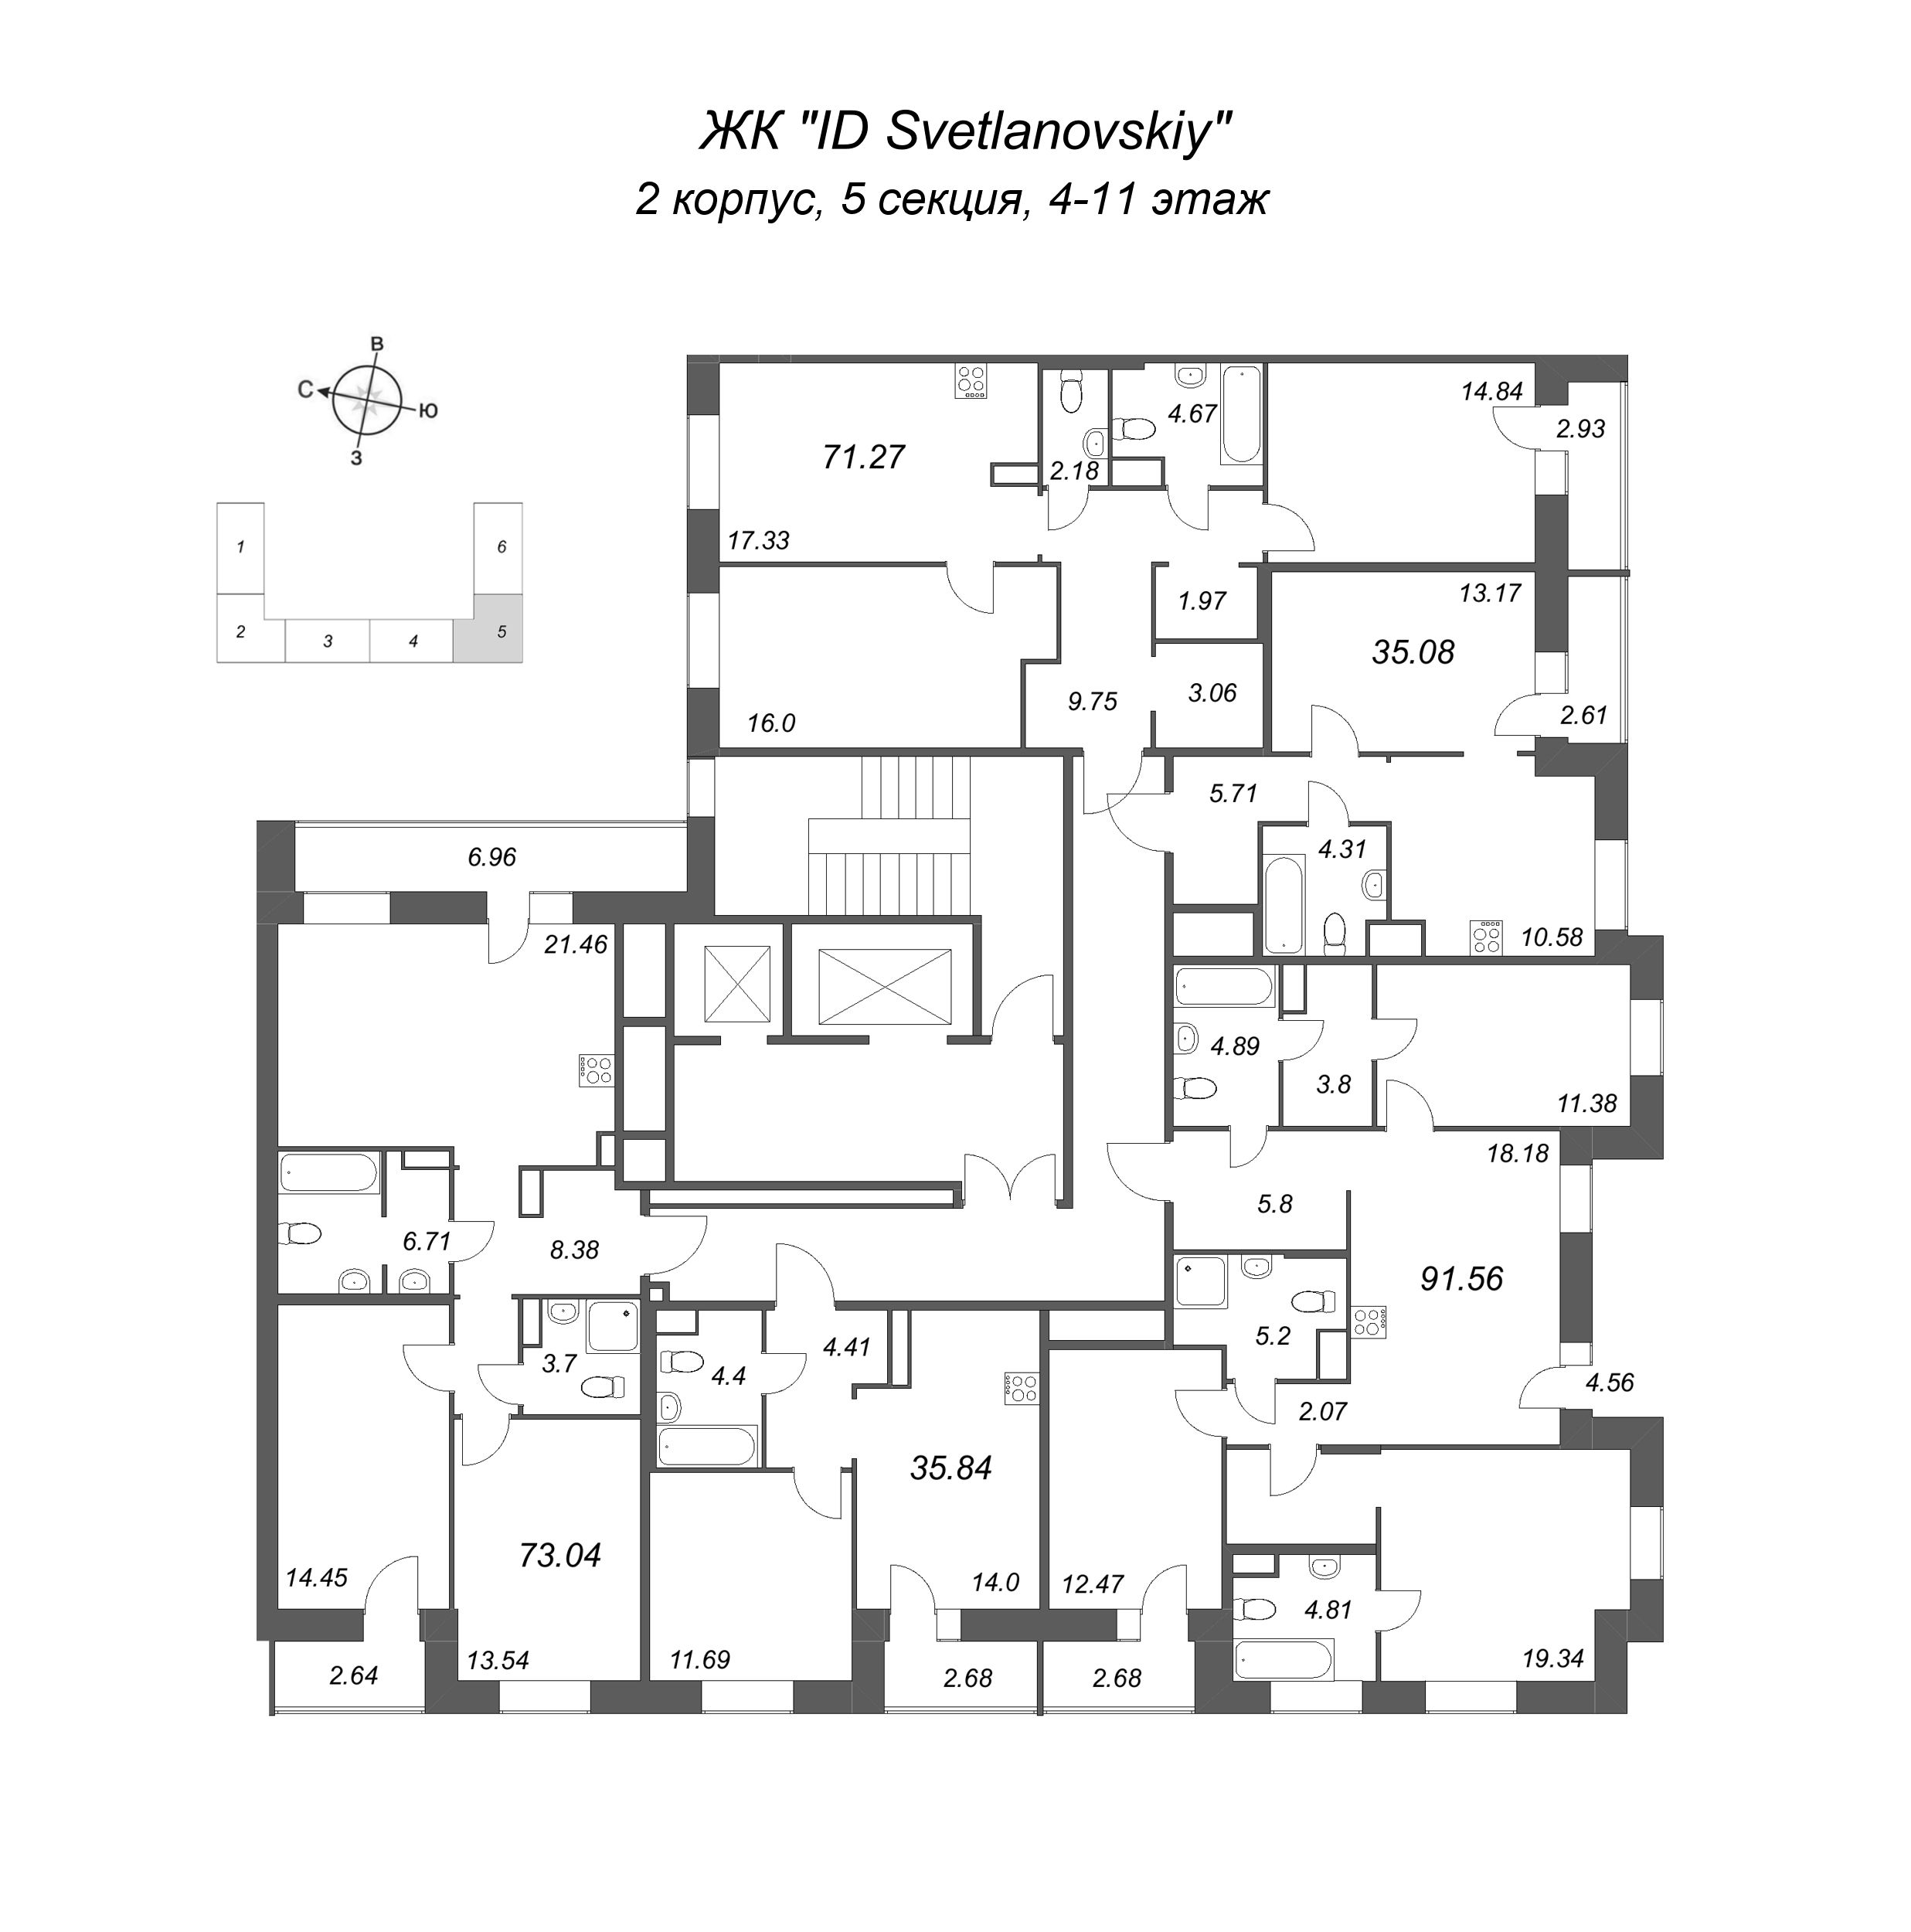 4-комнатная (Евро) квартира, 91.56 м² - планировка этажа